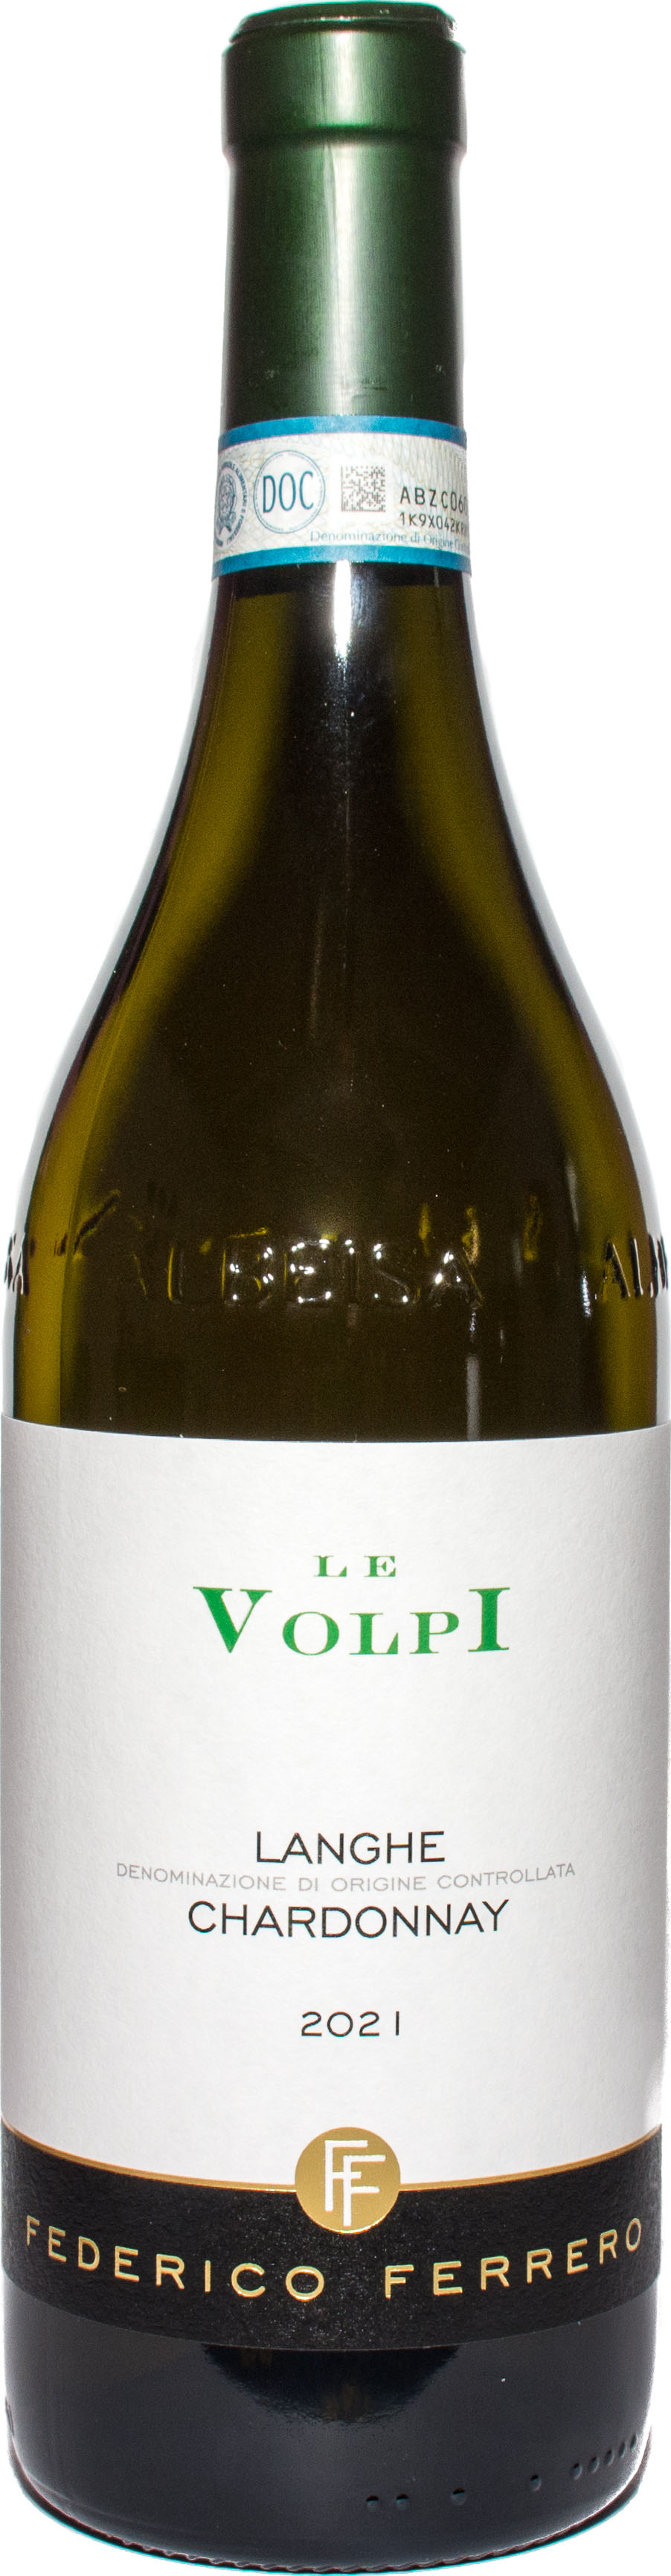 Le Volpi - Langhe D.O.C. Chardonnay